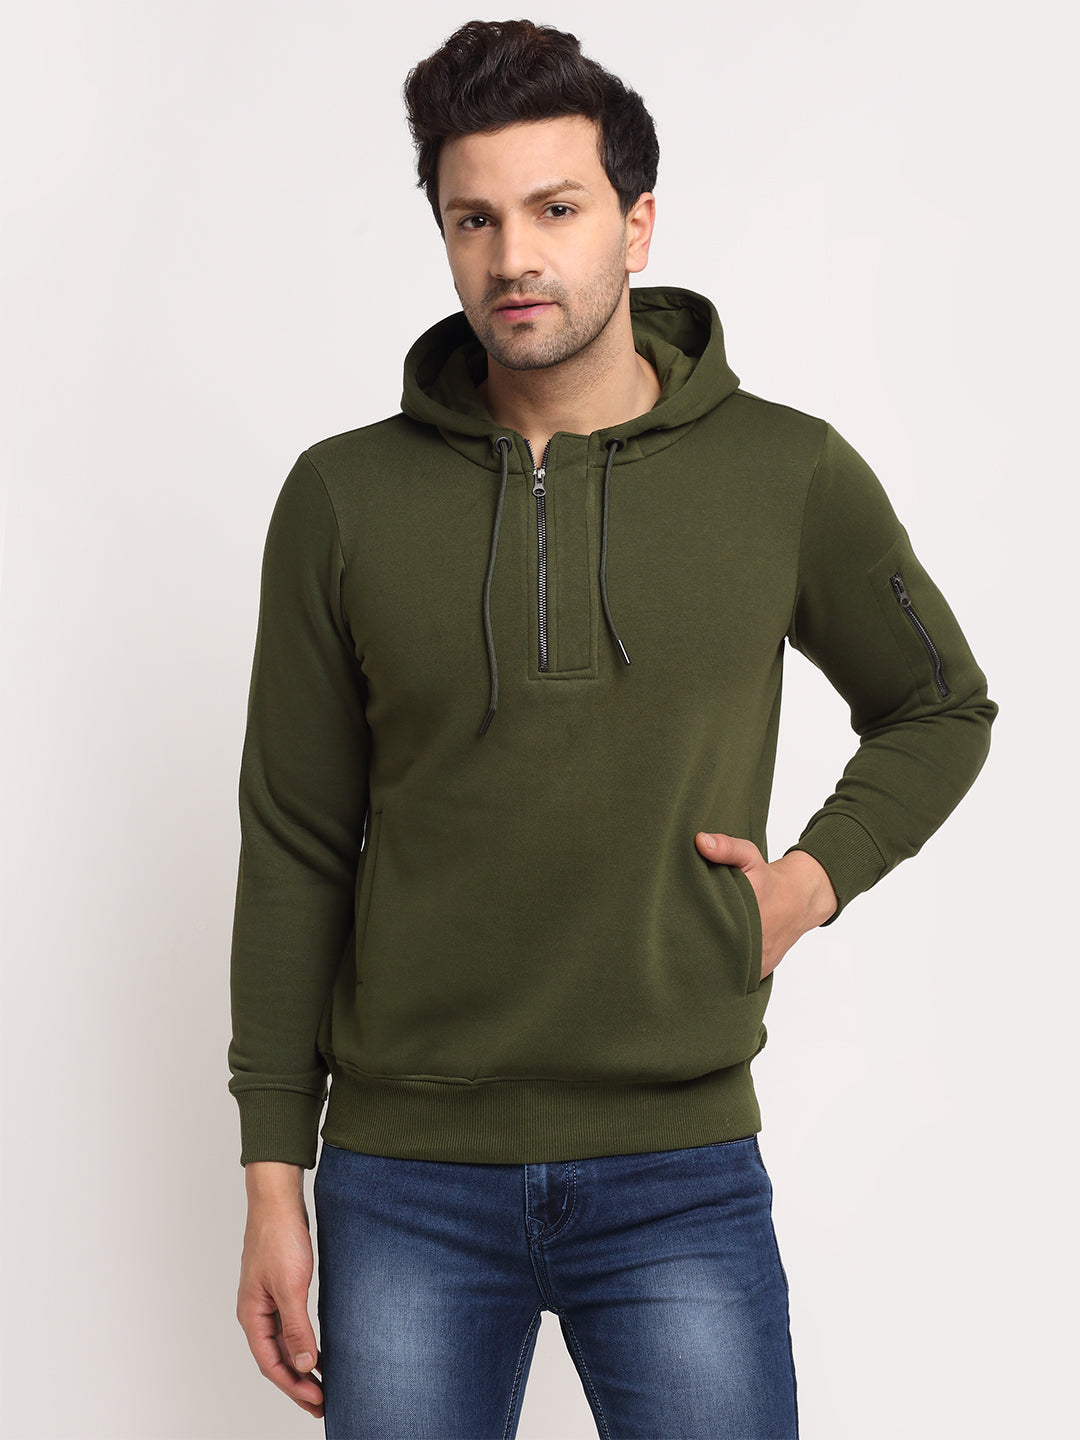 Men Olive Solid Hooded Sweatshirt